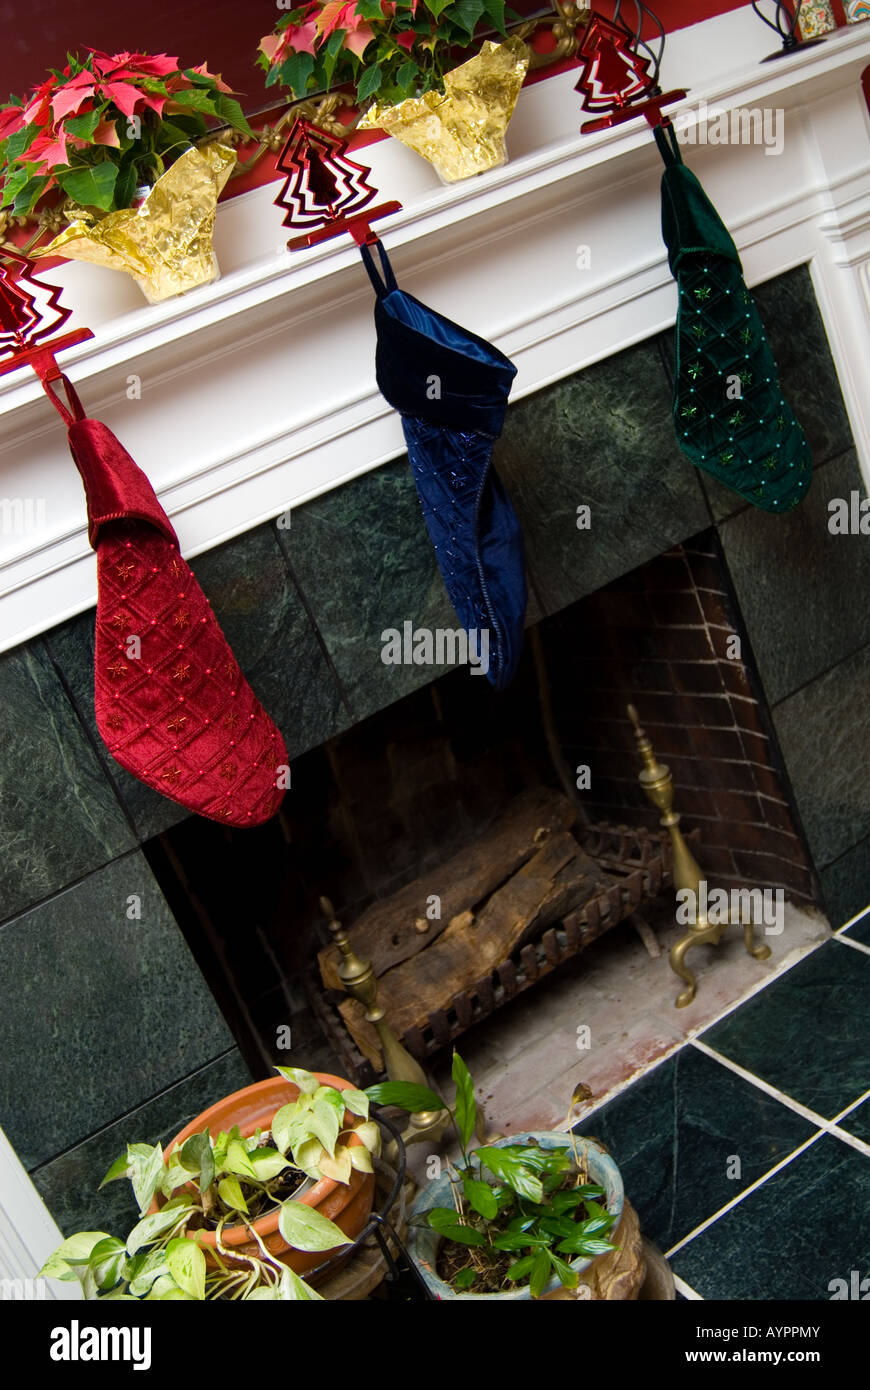 https://c8.alamy.com/comp/AYPPMY/christmas-stockings-hung-by-fireplace-AYPPMY.jpg